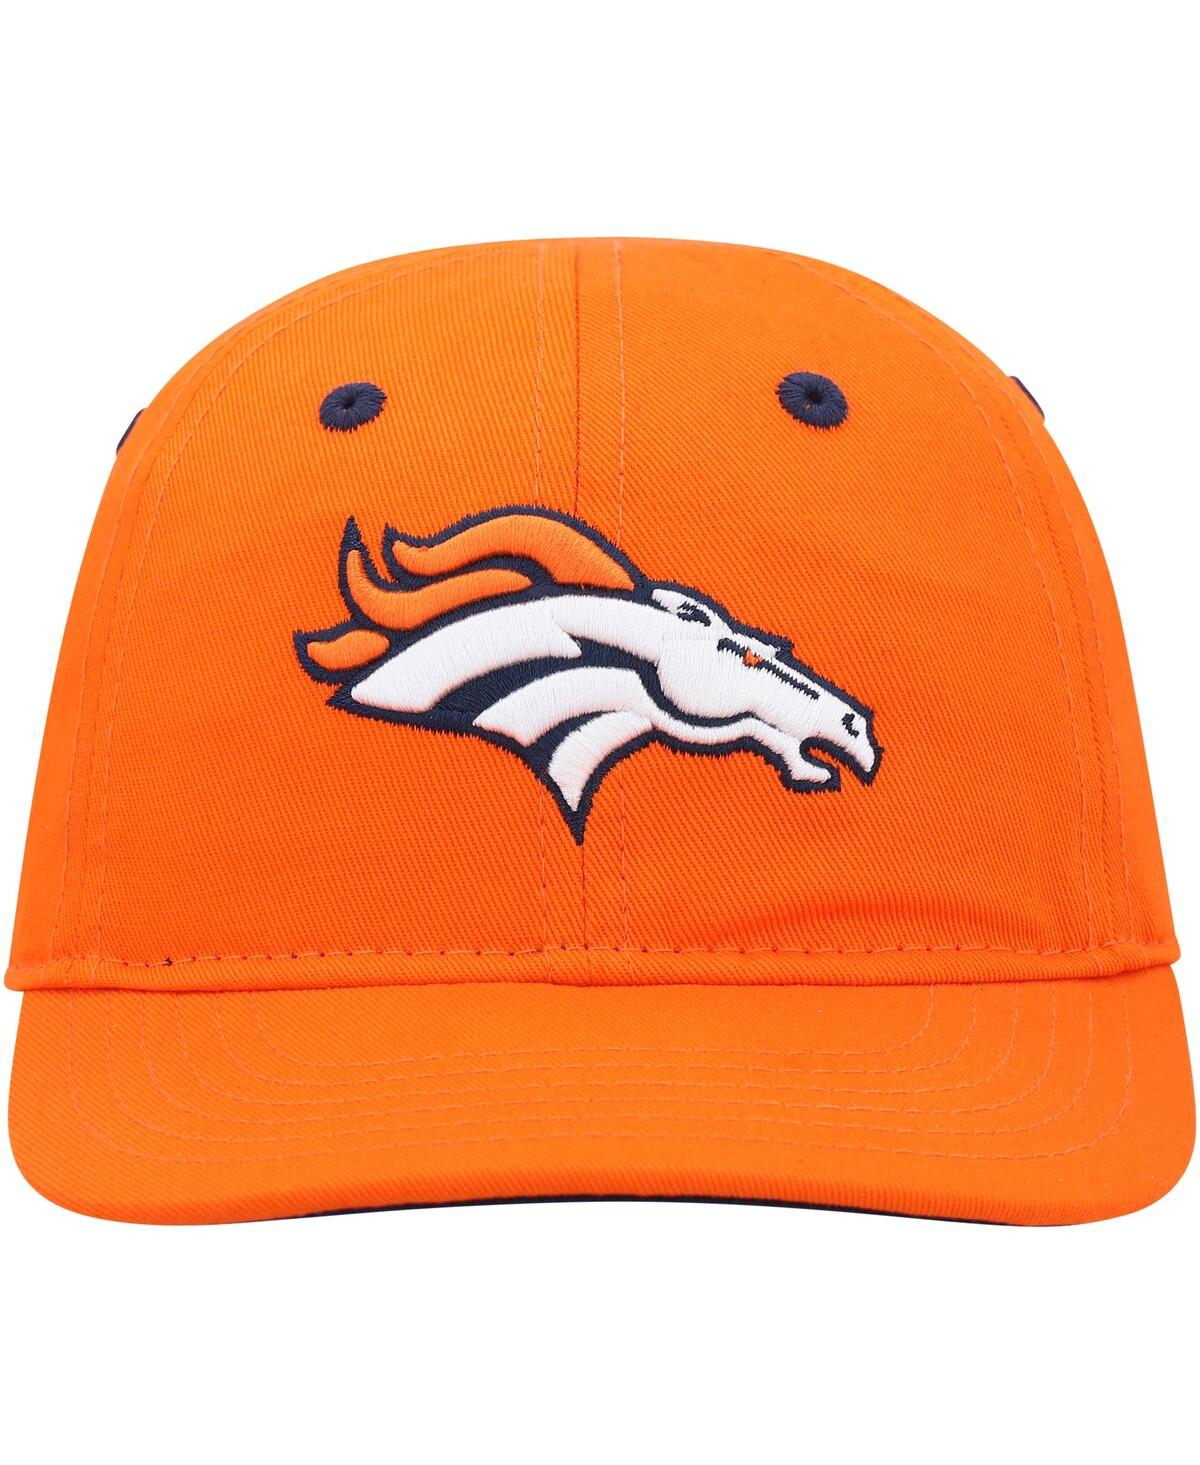 Shop Outerstuff Baby Boys And Girls Orange Denver Broncos Team Slouch Flex Hat